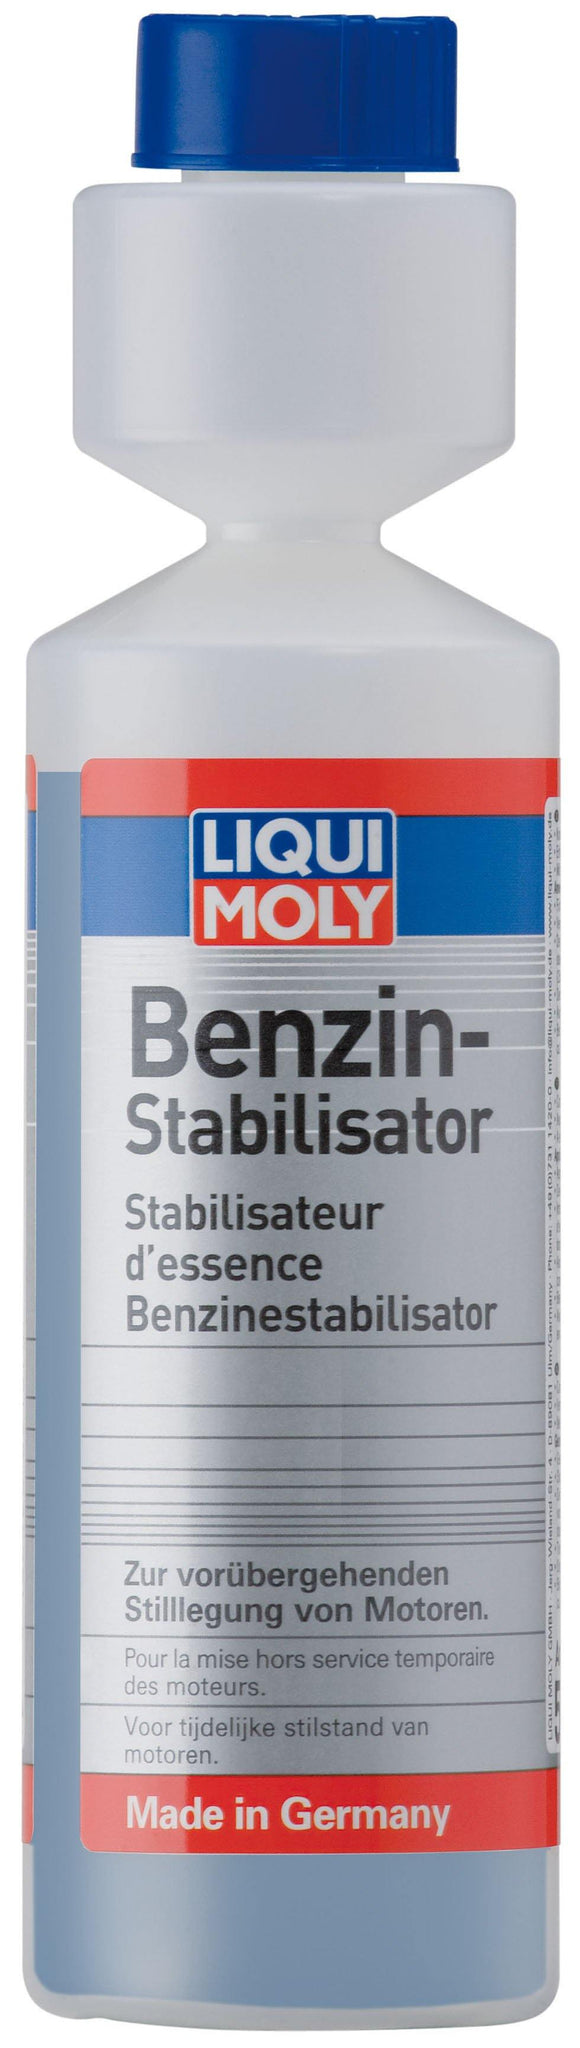 Benzin-Stabilisator – Liqui Moly Shop